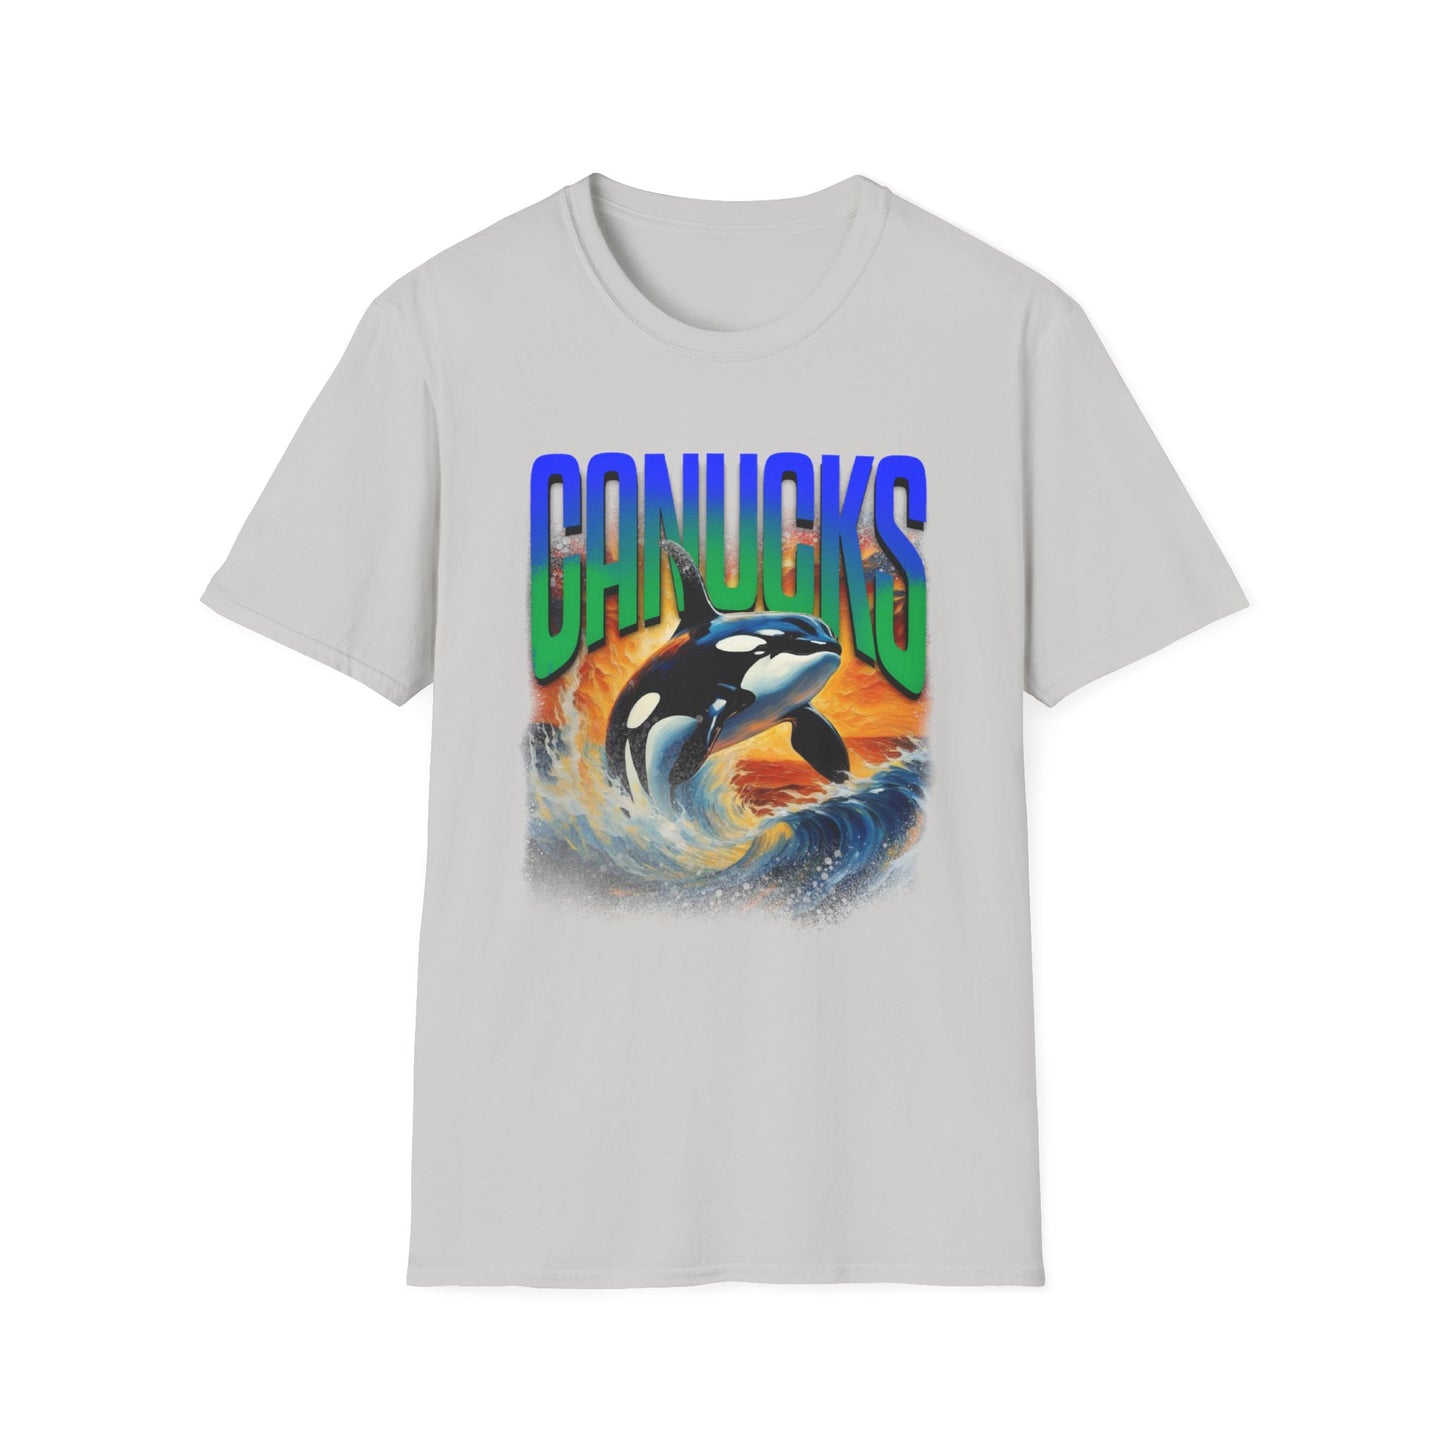 Orca Canucks Graphic T-Shirt